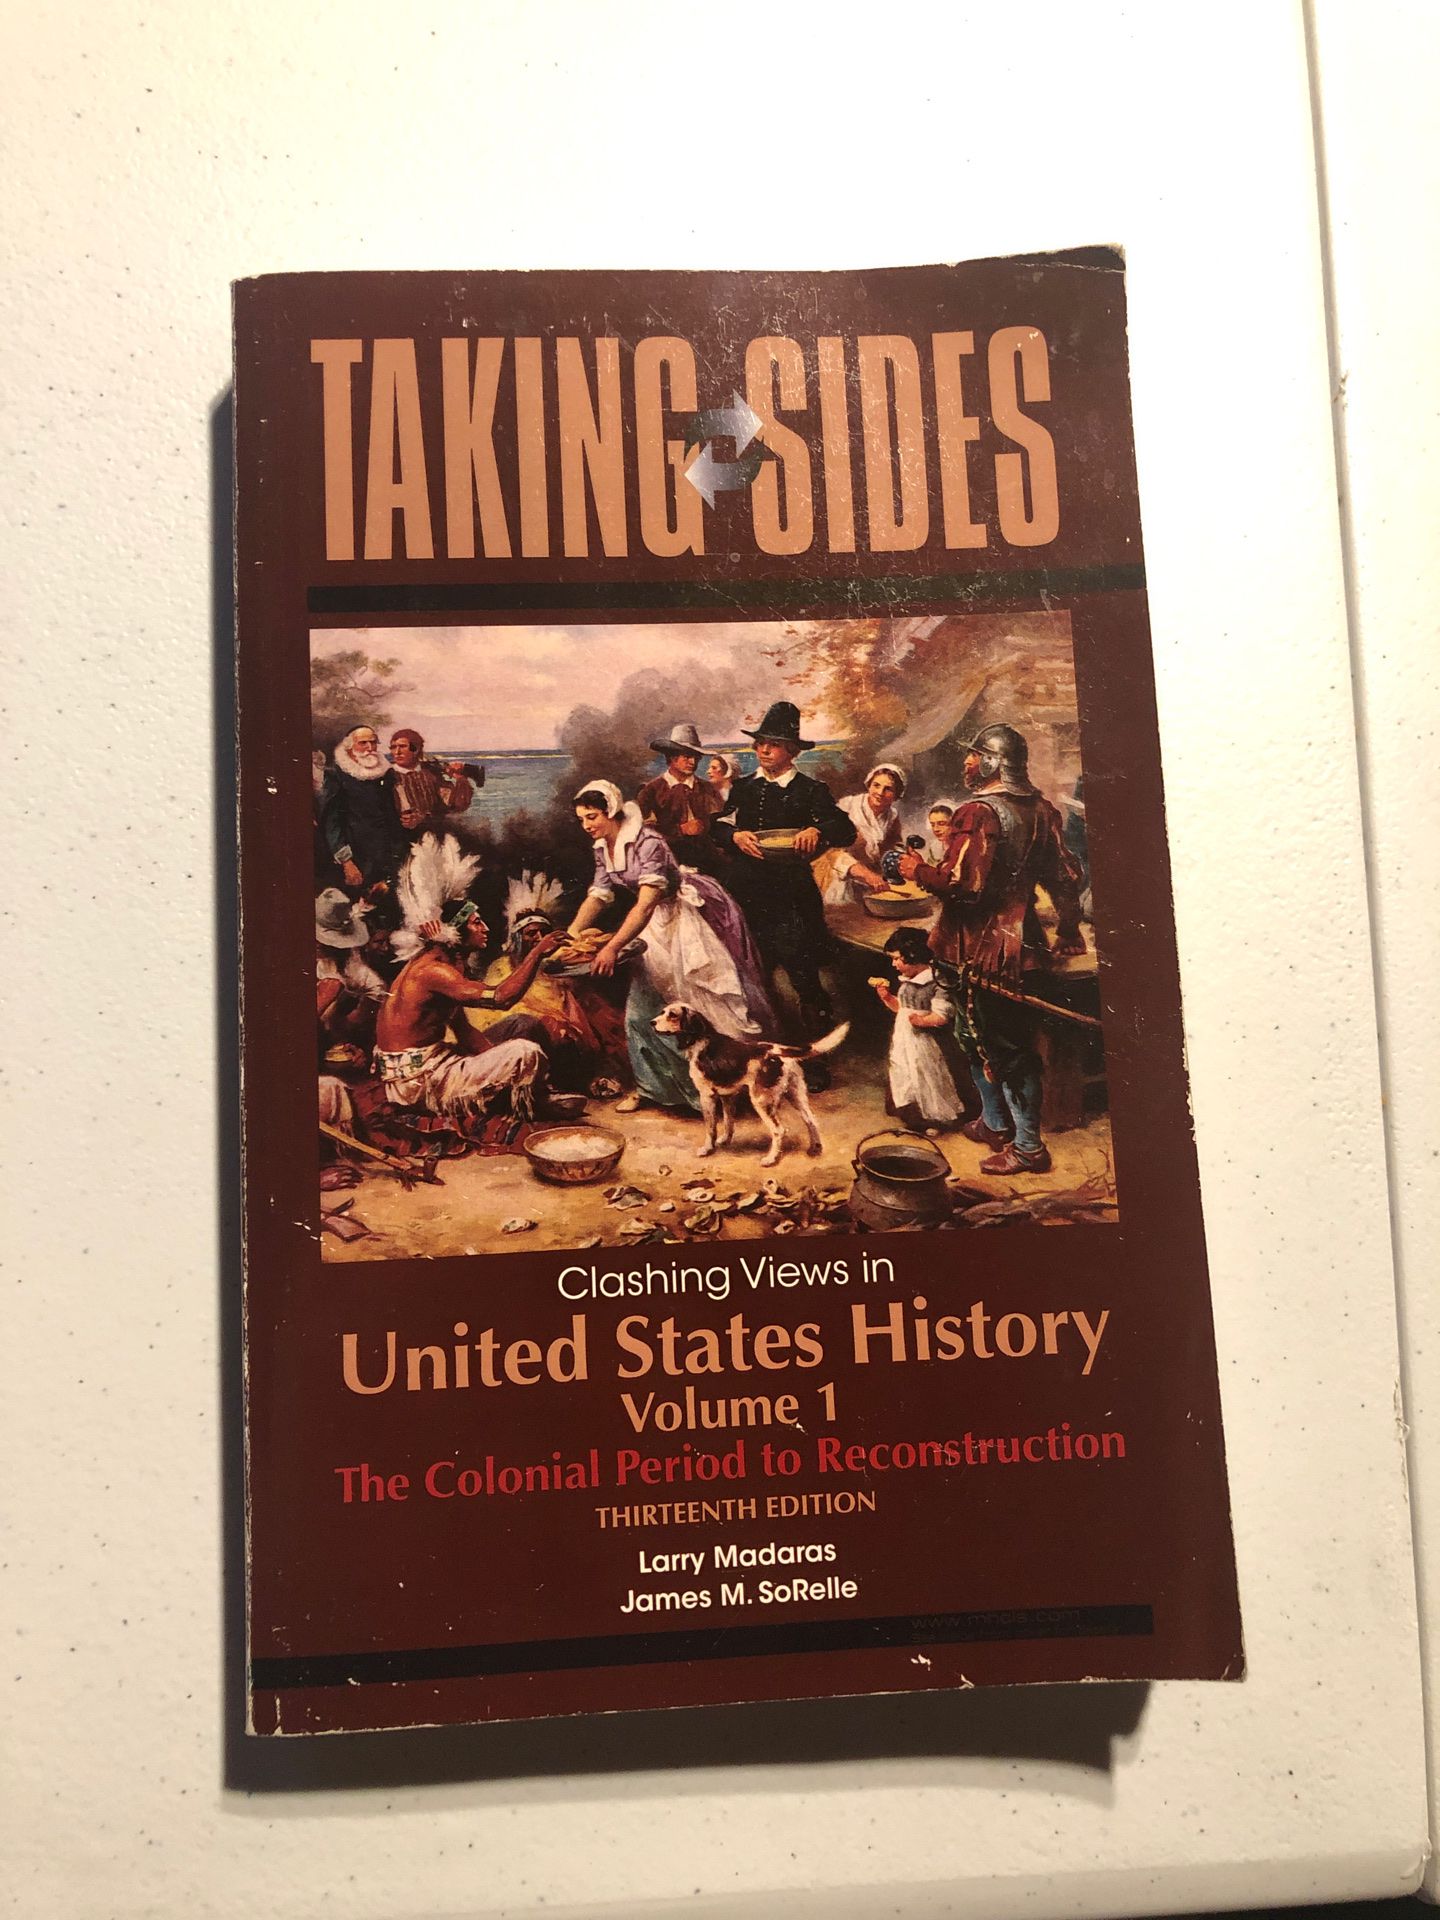 Taking Sides Clashing Views United States History Volume 1